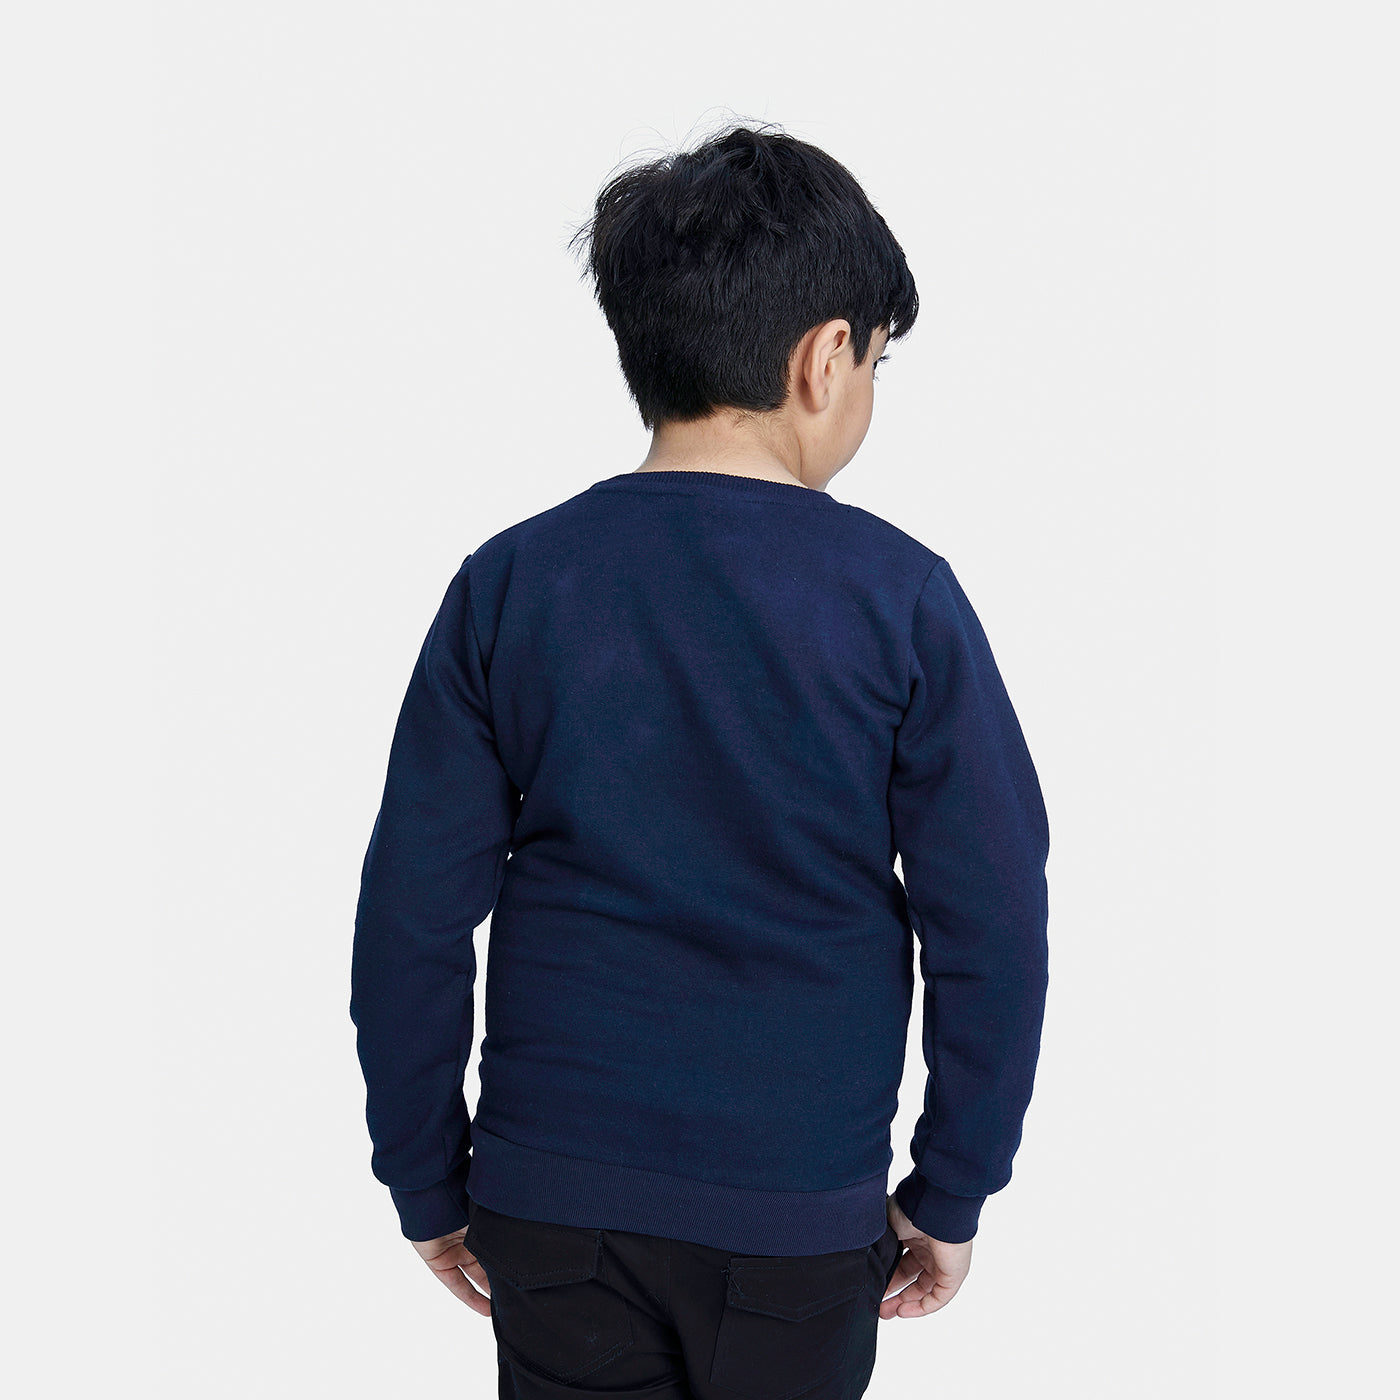 Plush Sweatshirt for Boys